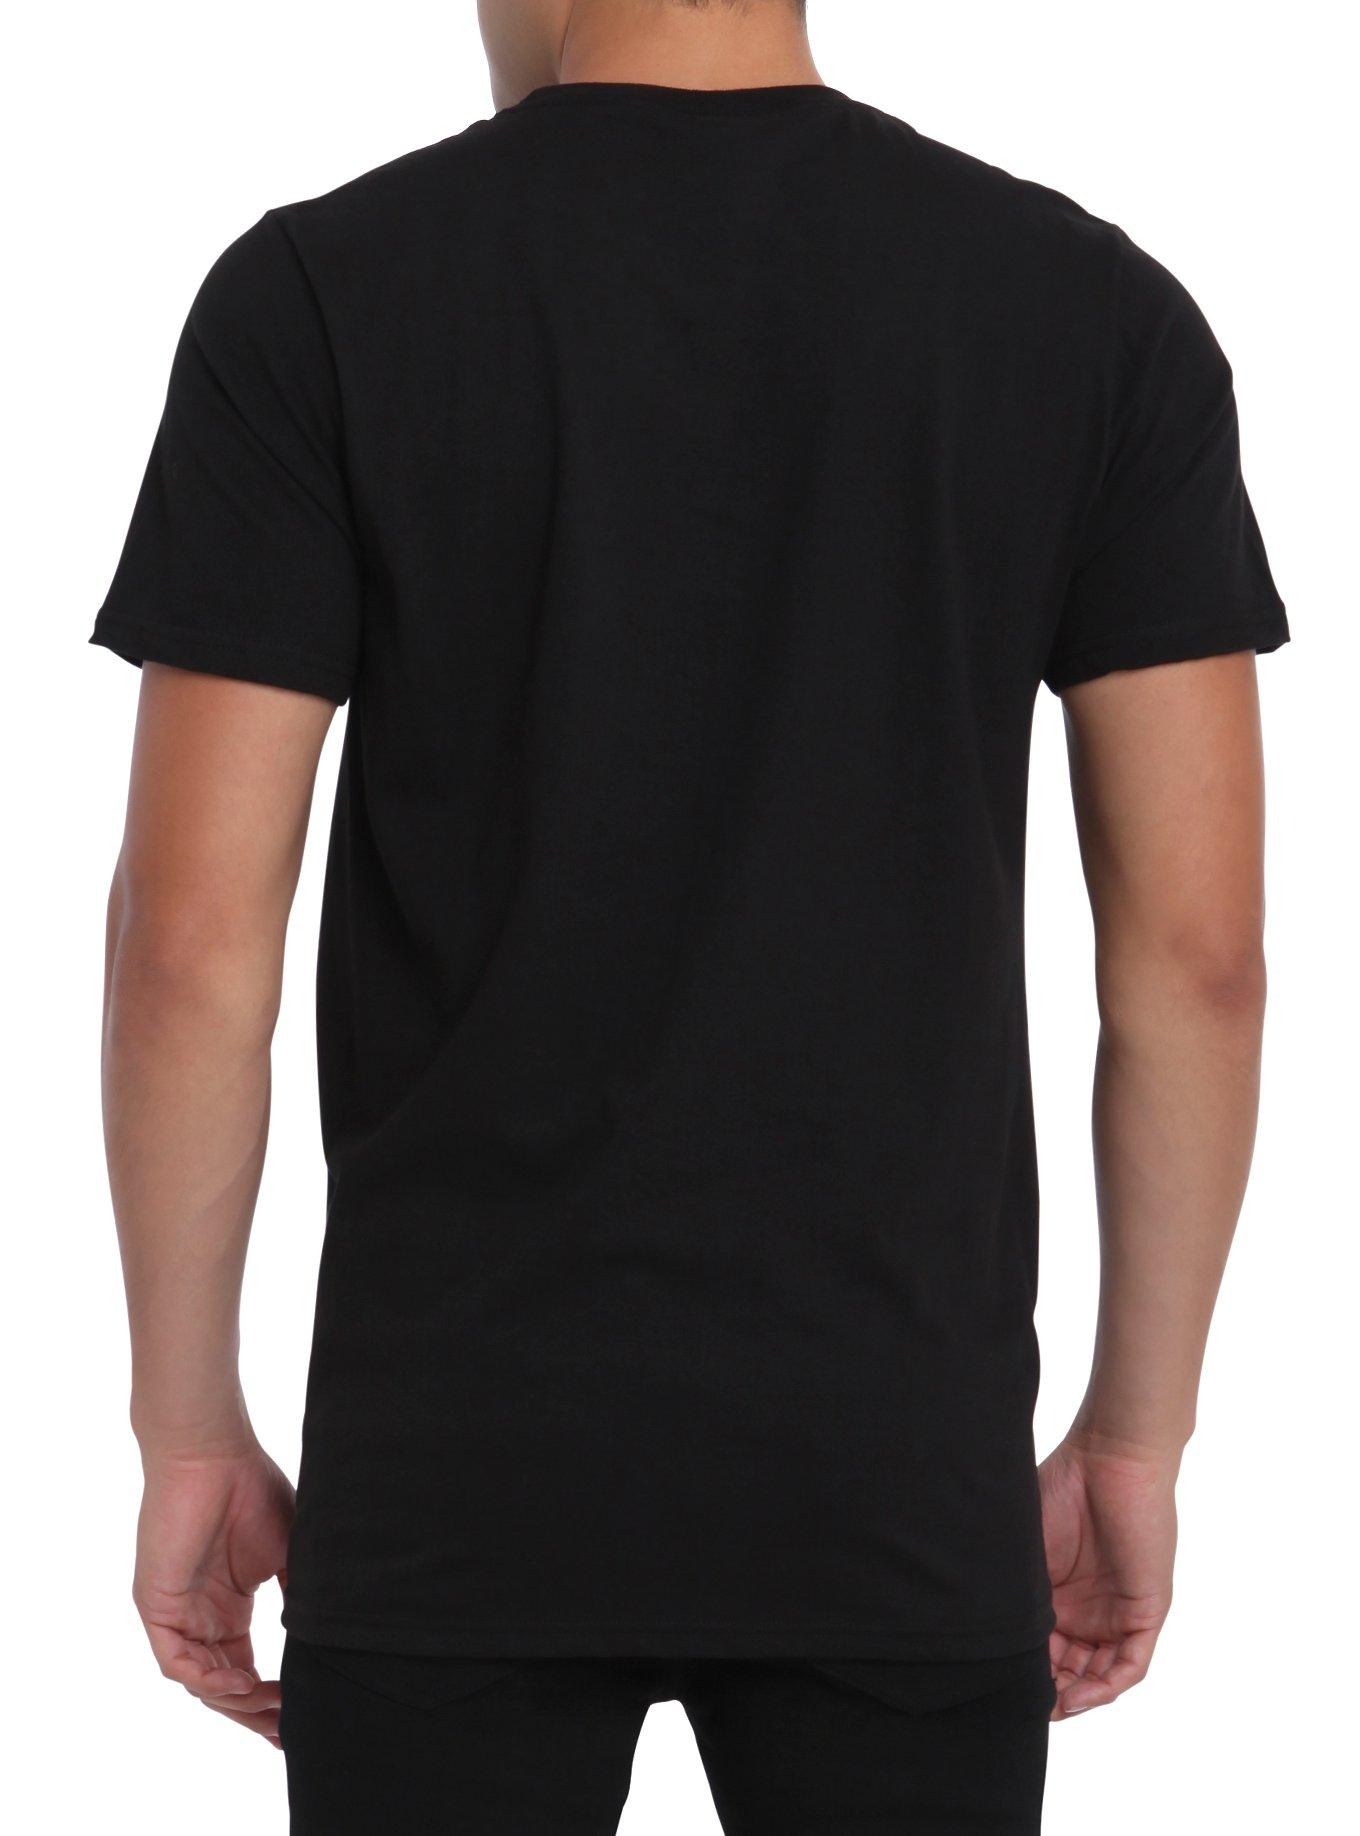 Hollywood Undead Group T-Shirt 2XL, BLACK, alternate